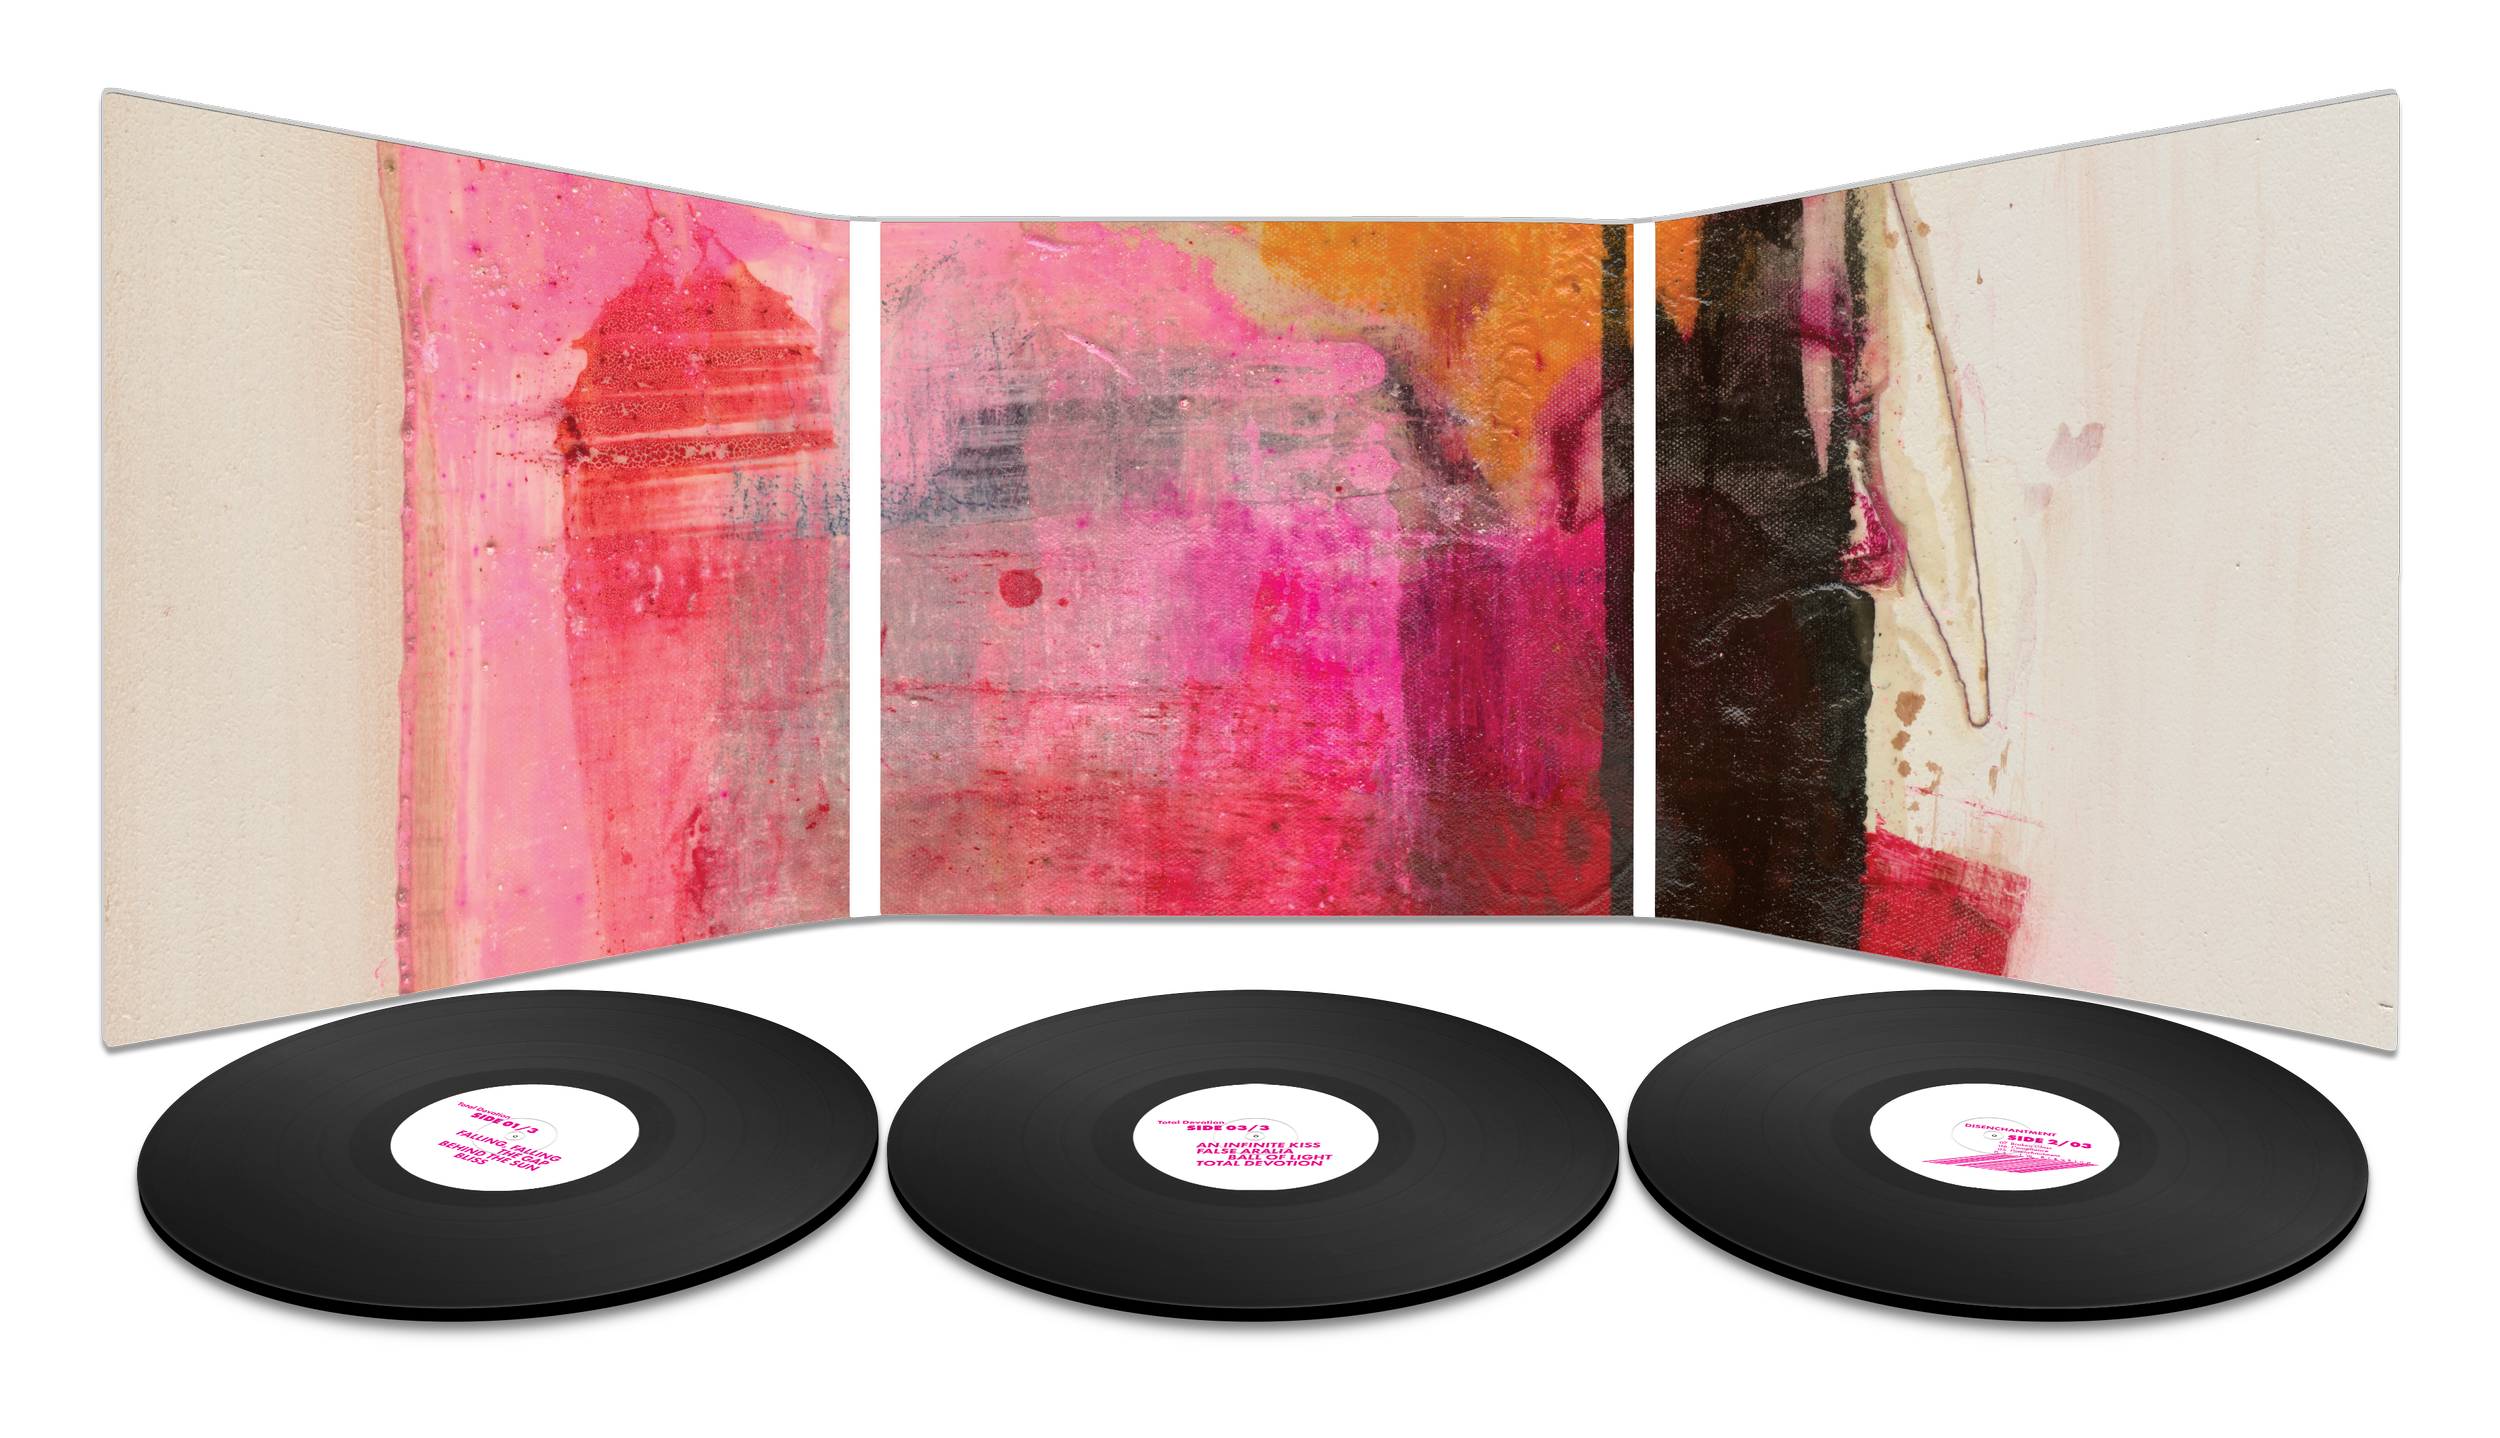 Devotion Pink Vinyl